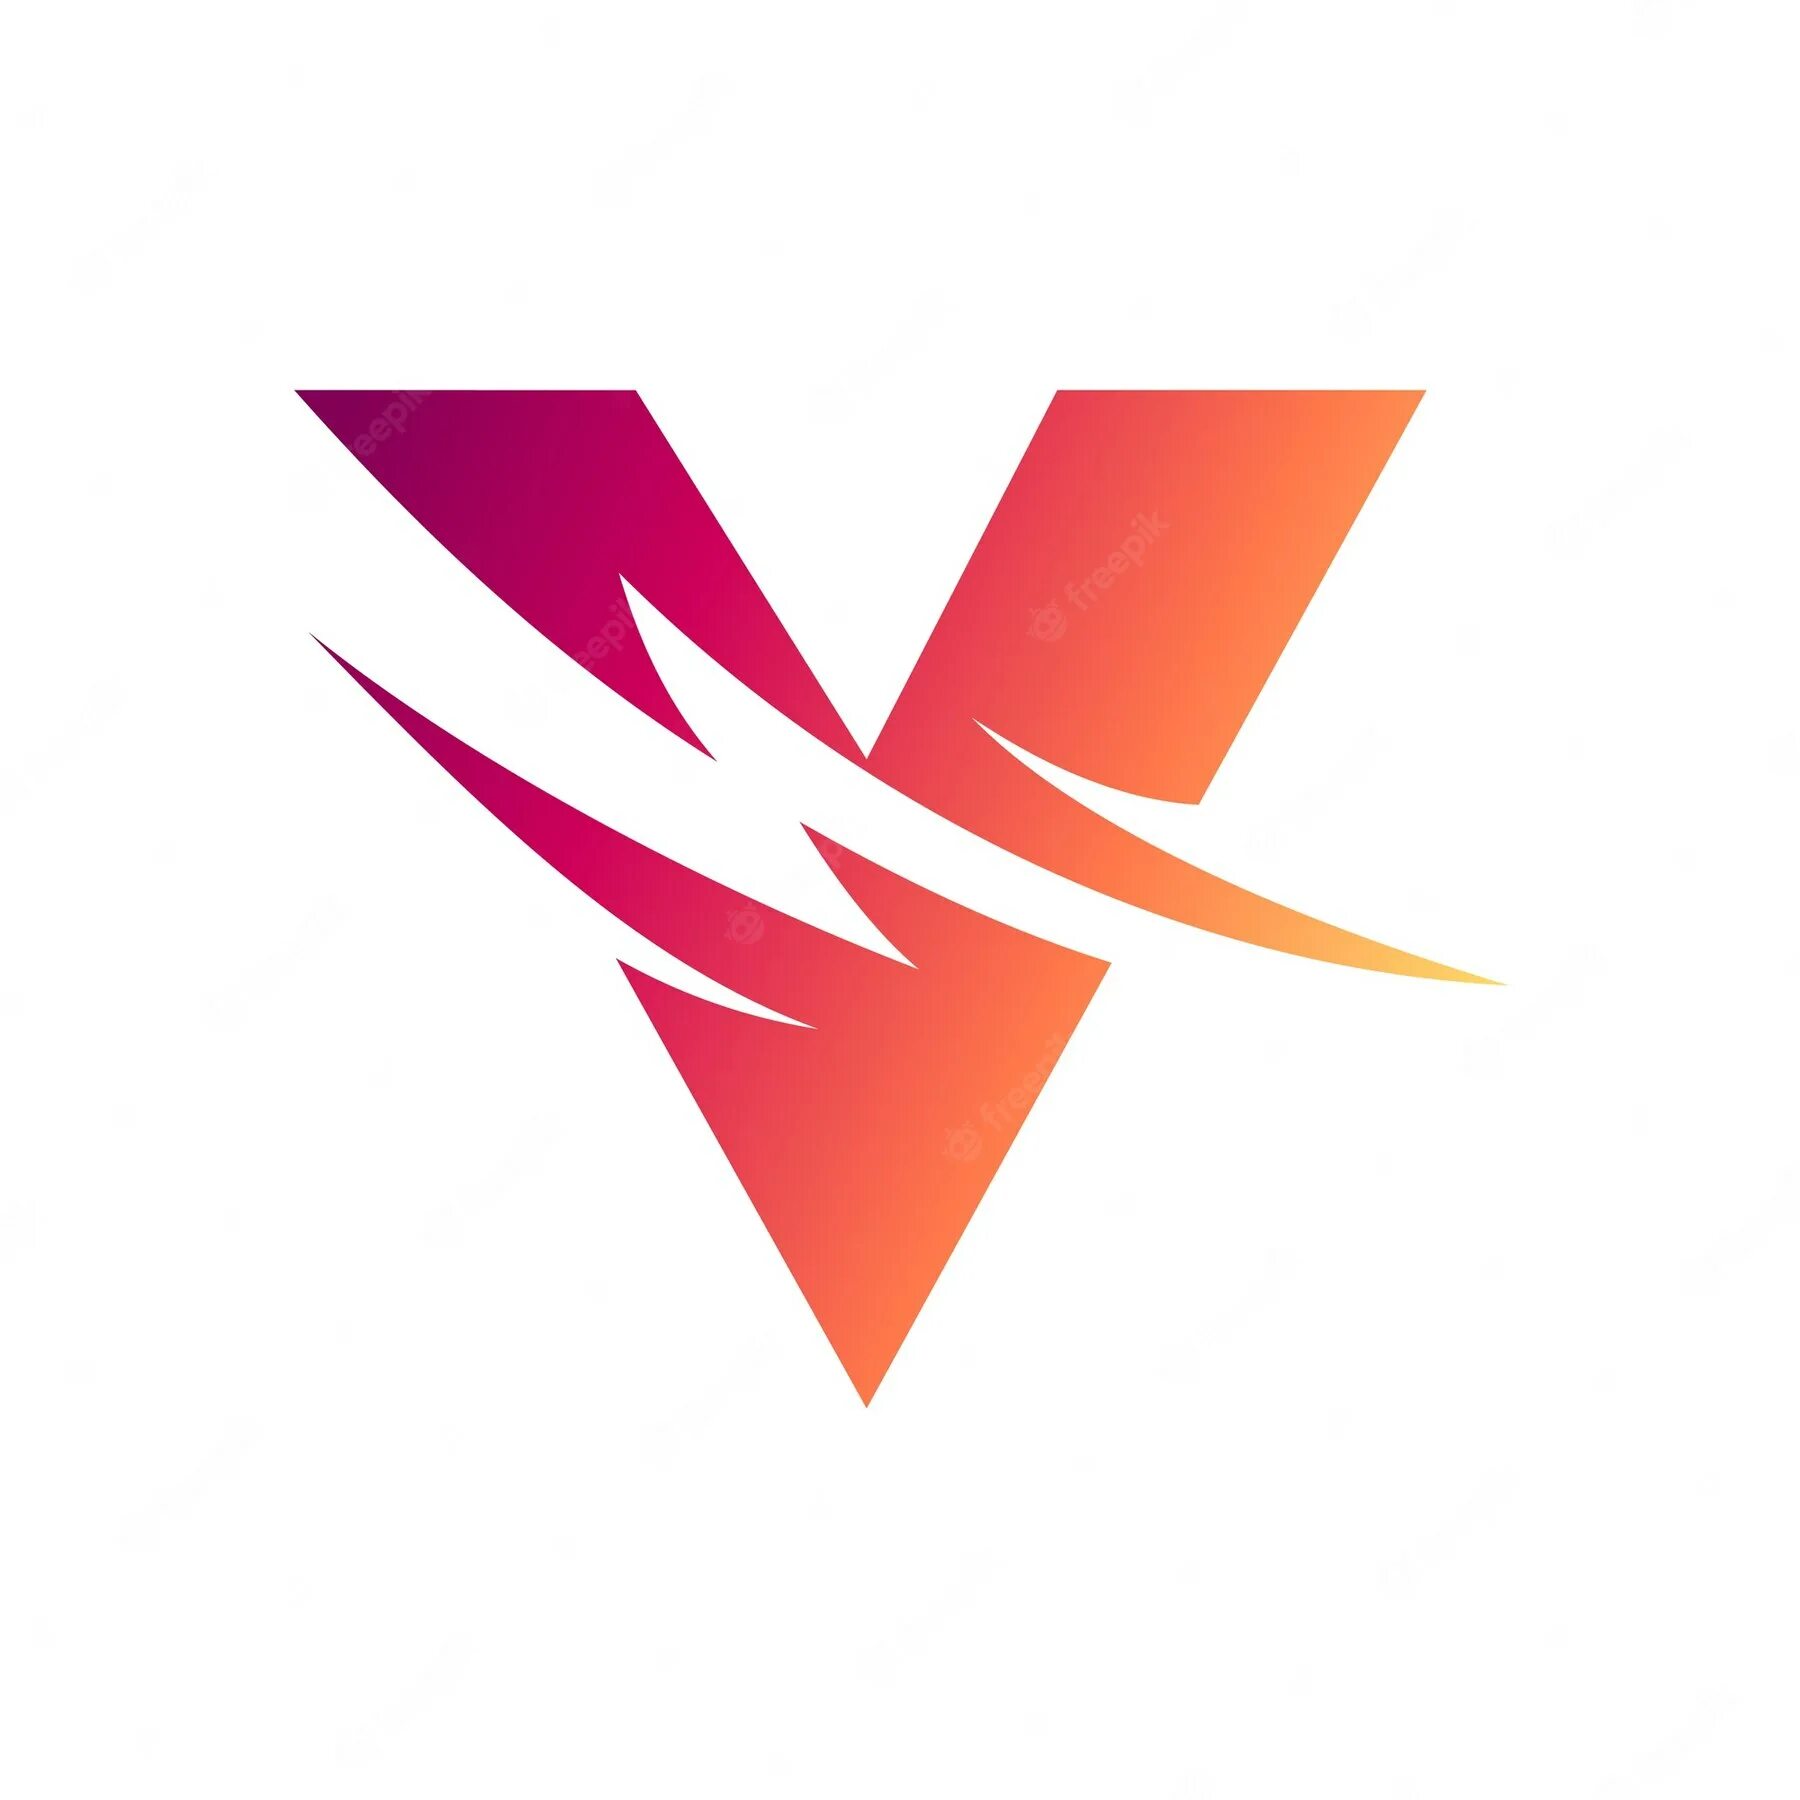 V. Логотип v. Логотип с буквой v. Иконка буква v. Дизайн буквы v.